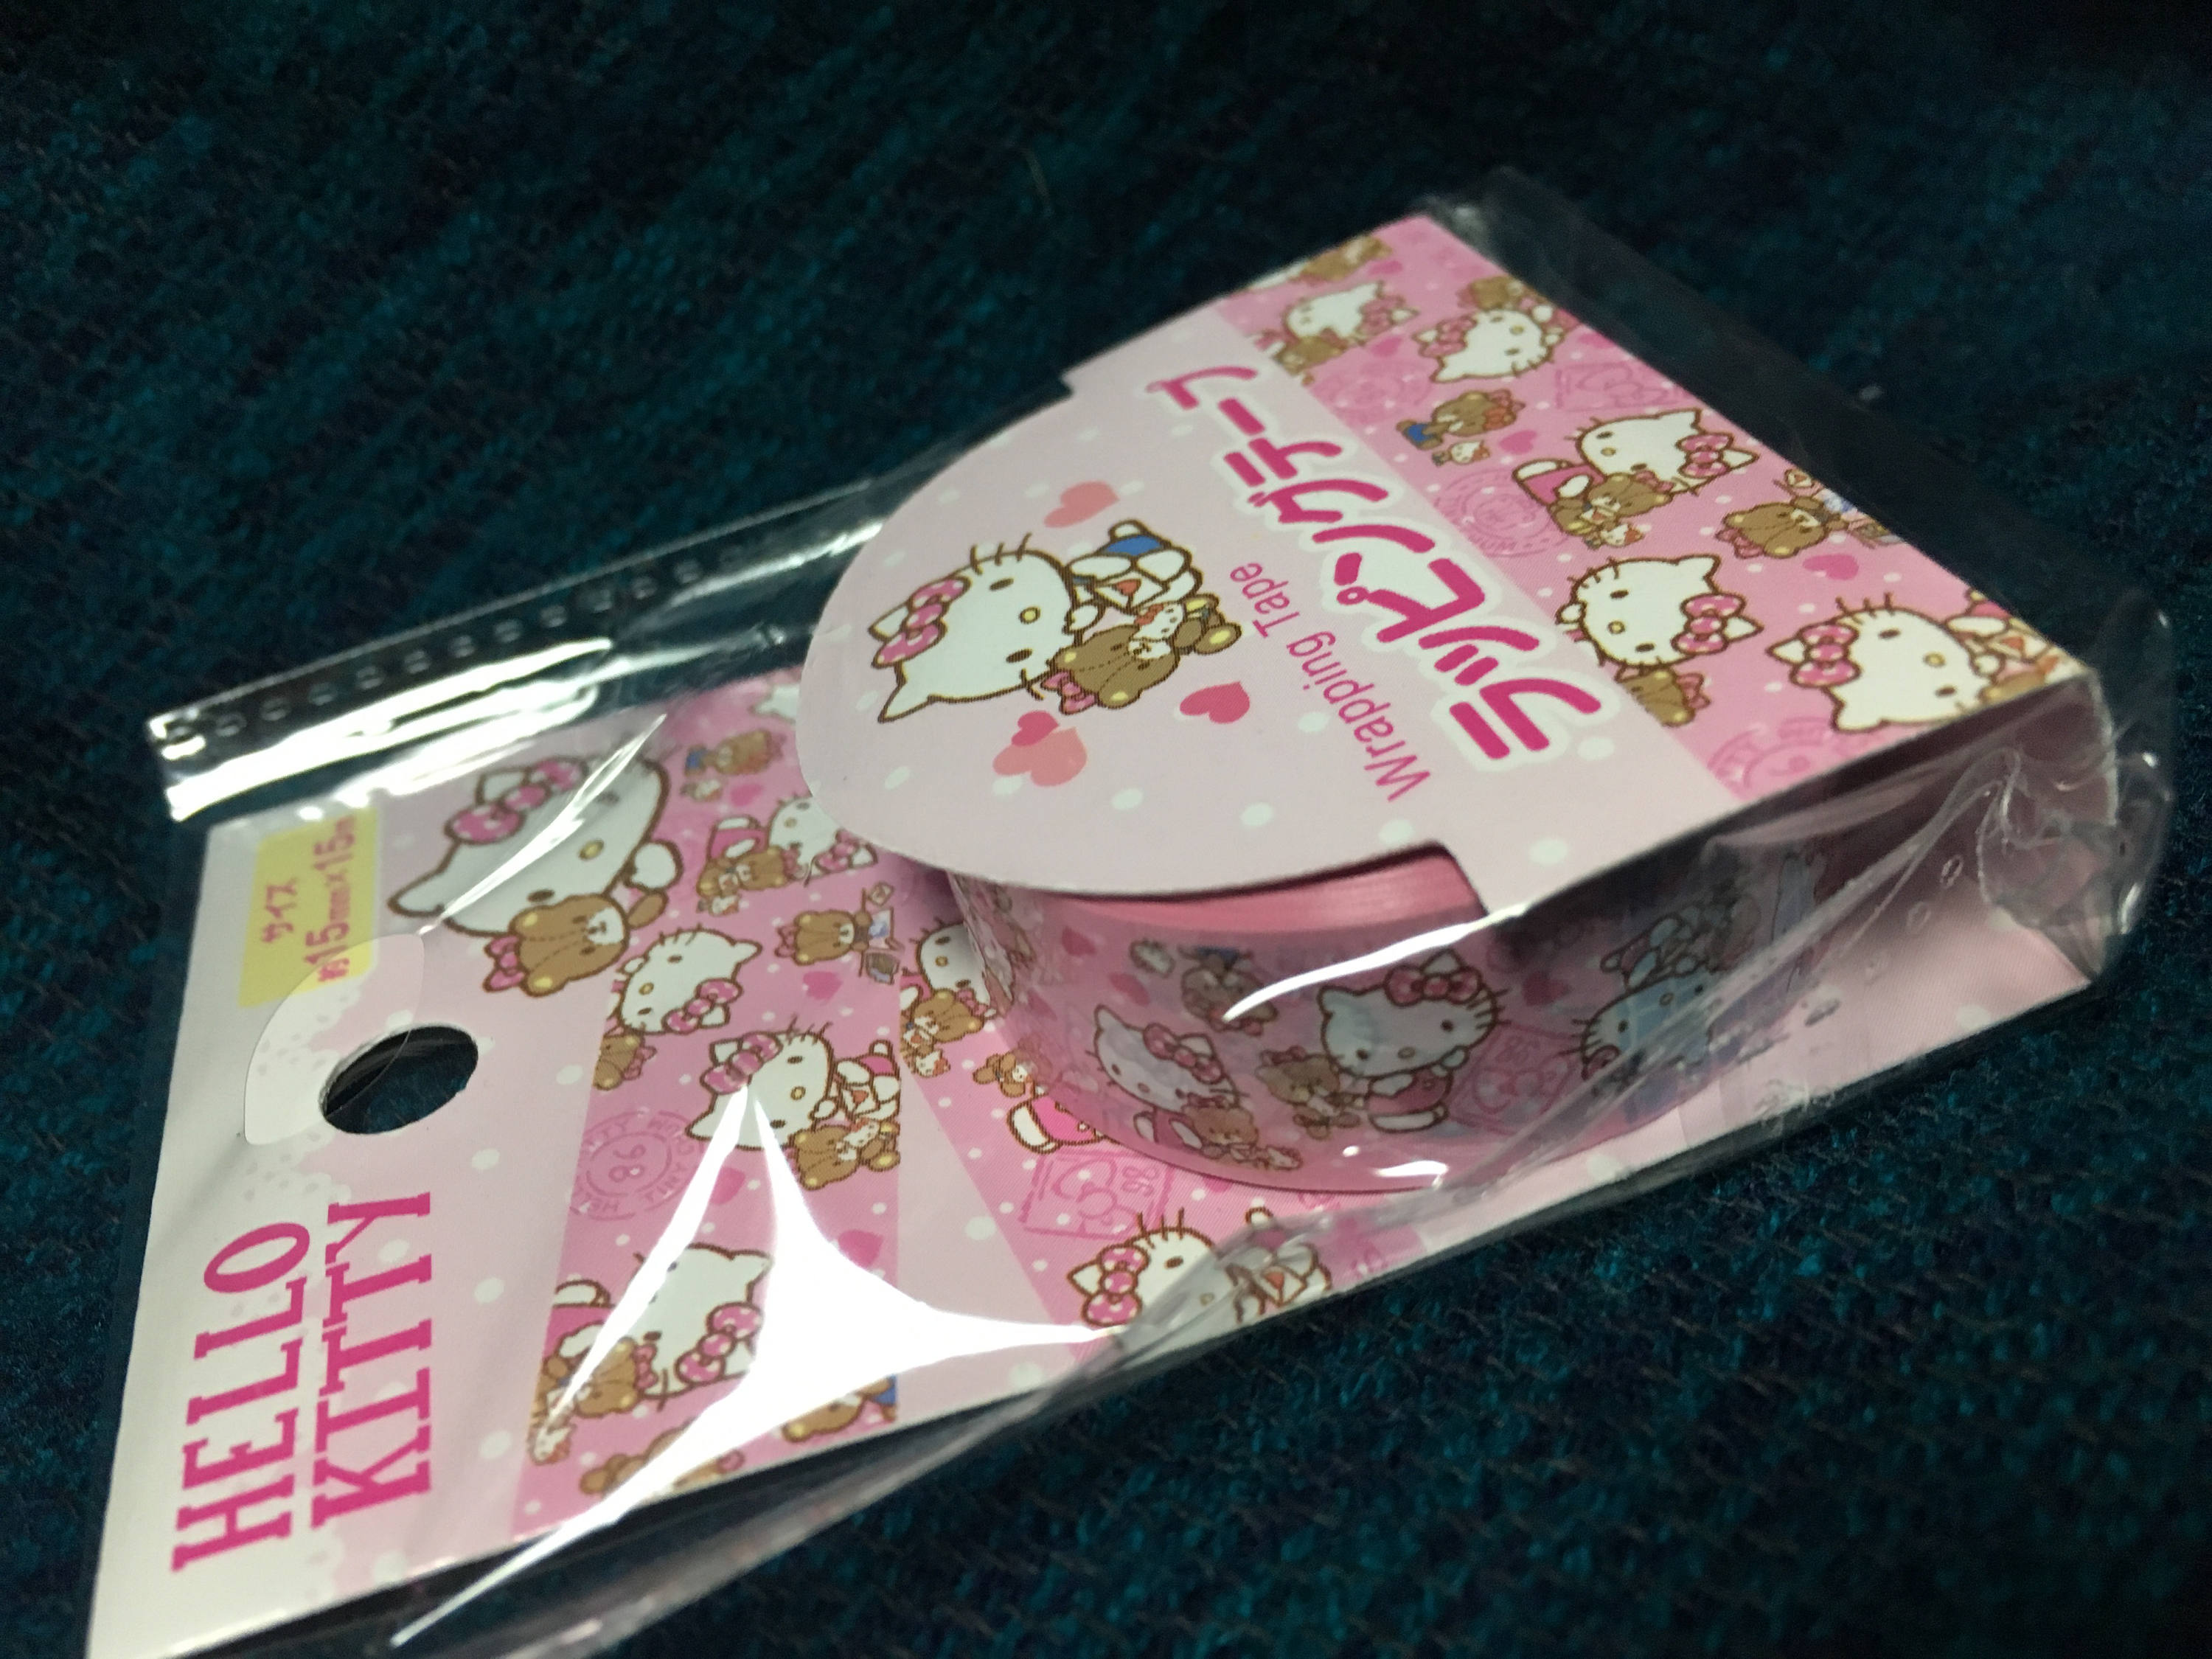 Sanrio Hello Kitty wrapping tape from mikenekofp on Etsy Studio